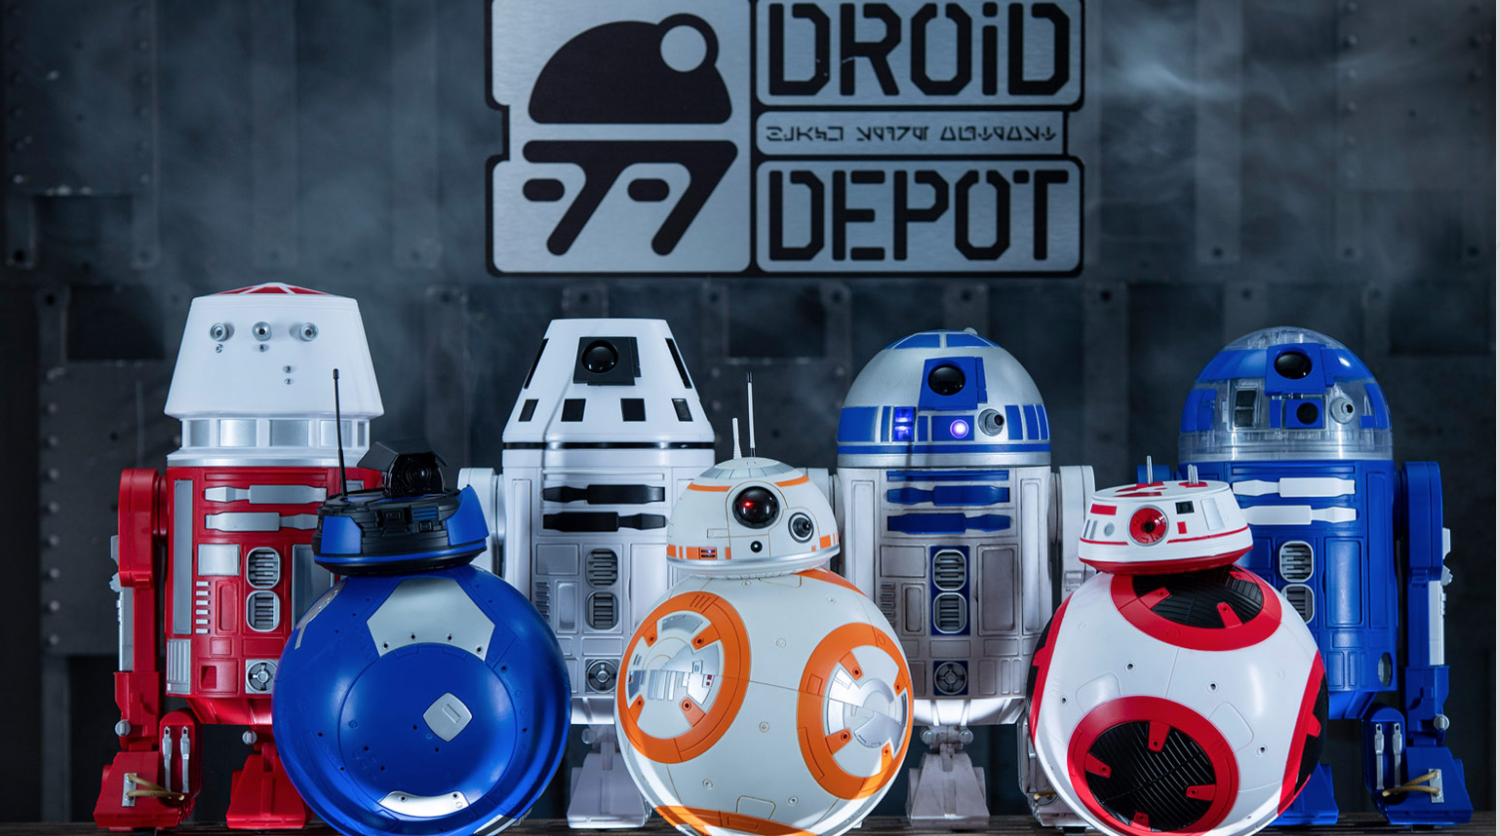 droid-depot-app